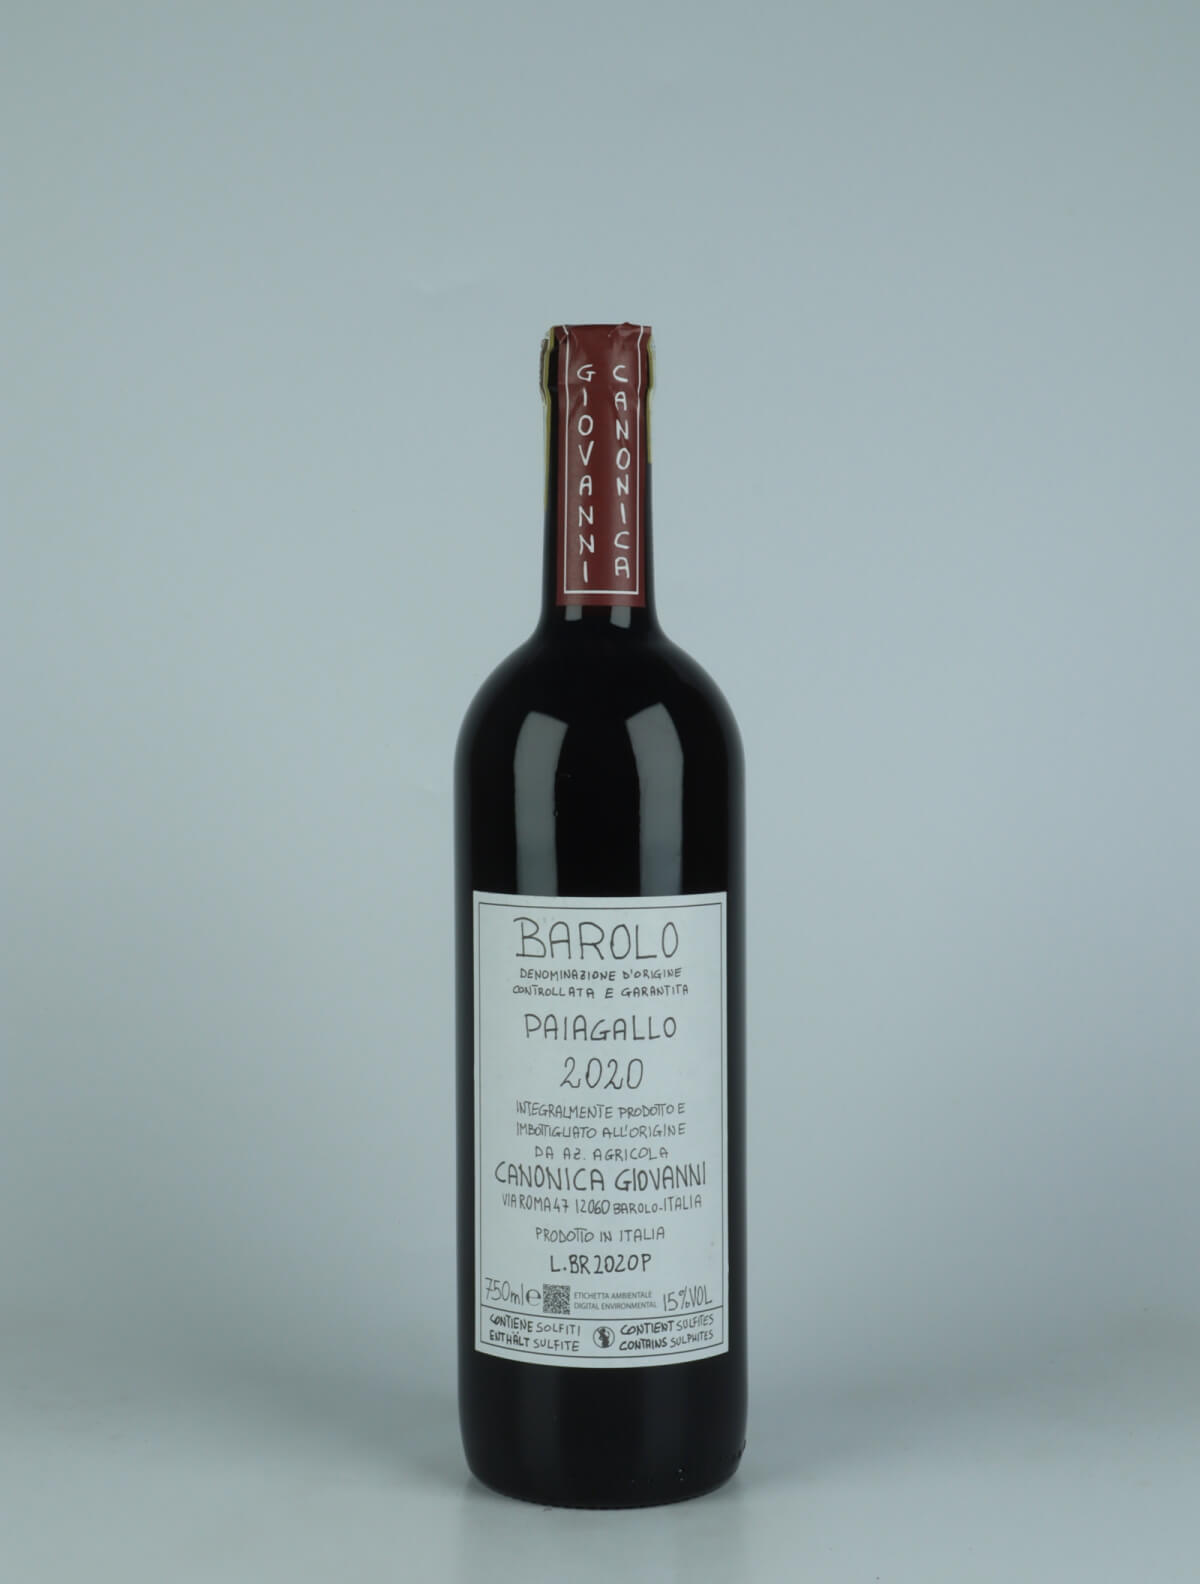 A bottle 2020 Barolo - Paiagallo Red wine from Giovanni Canonica, Piedmont in Italy